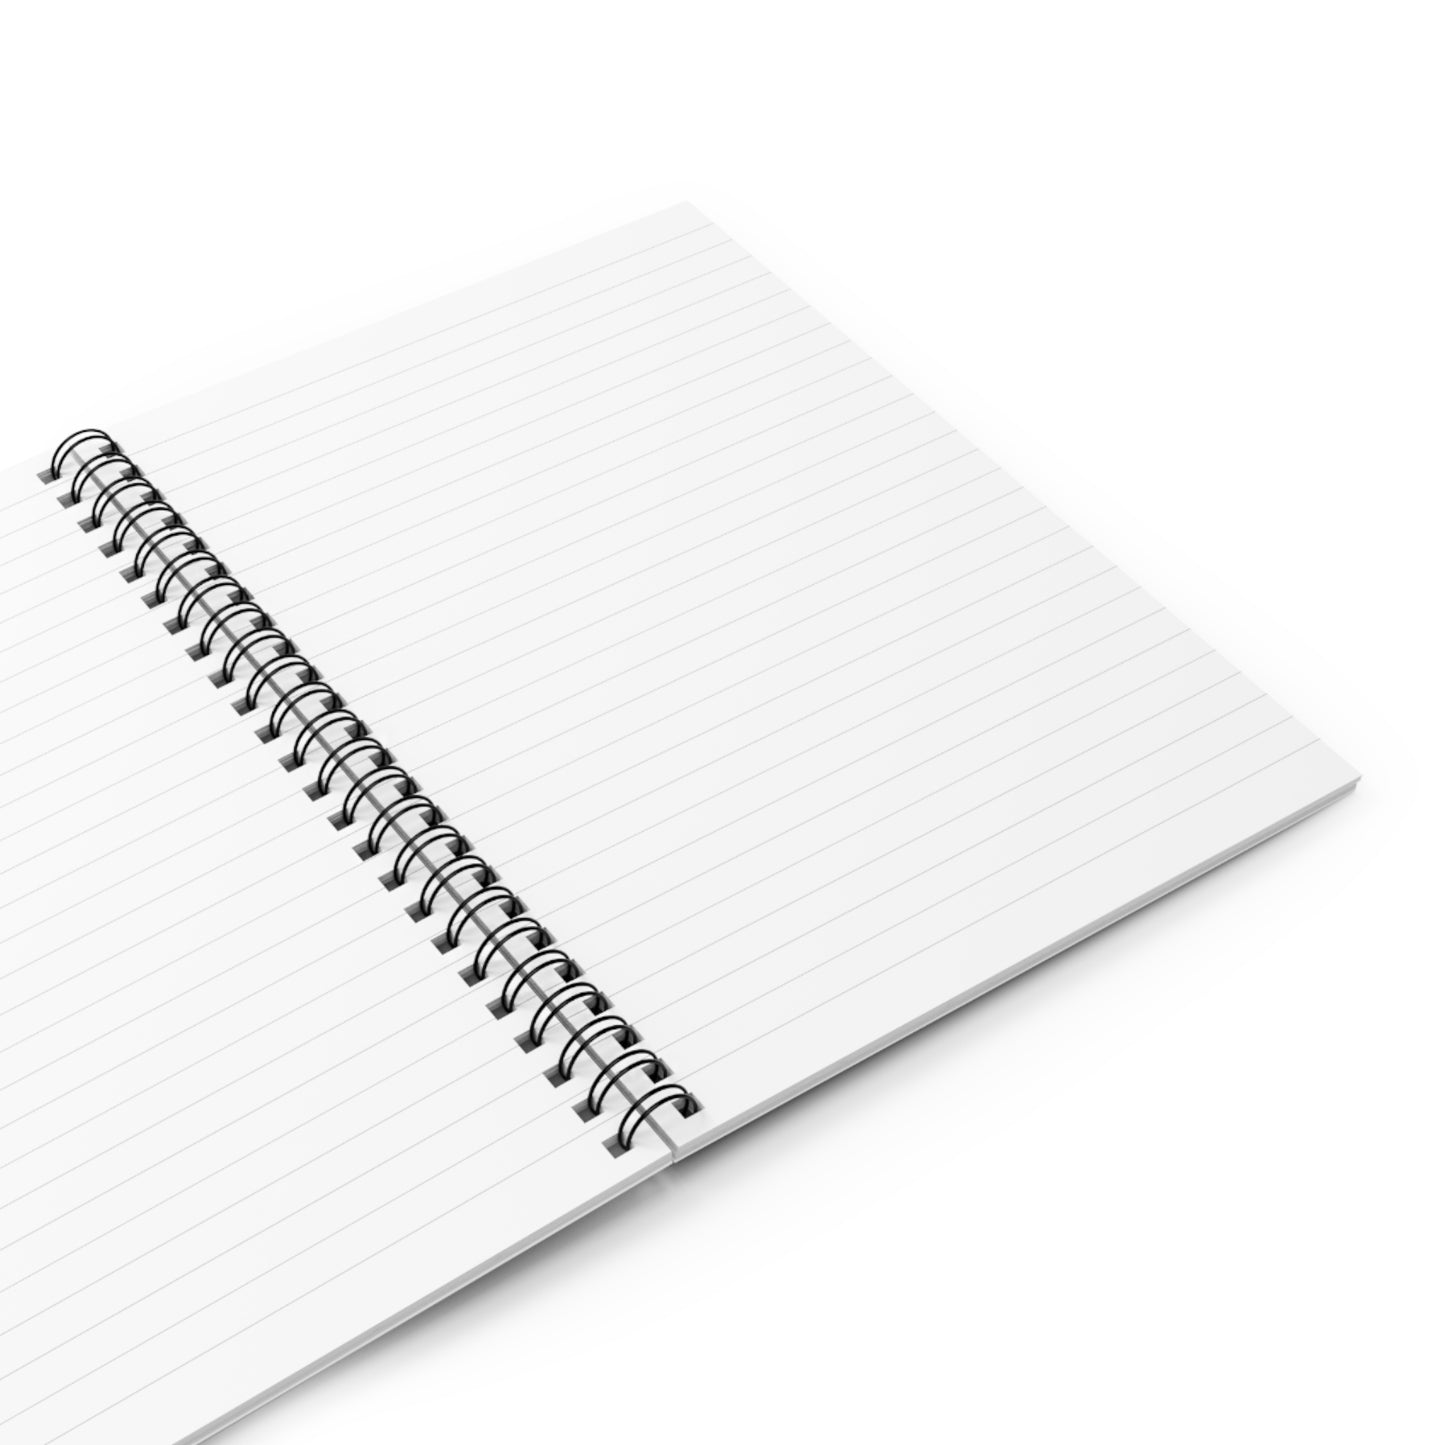 Corgi Spiral Notebook - Ruled Line